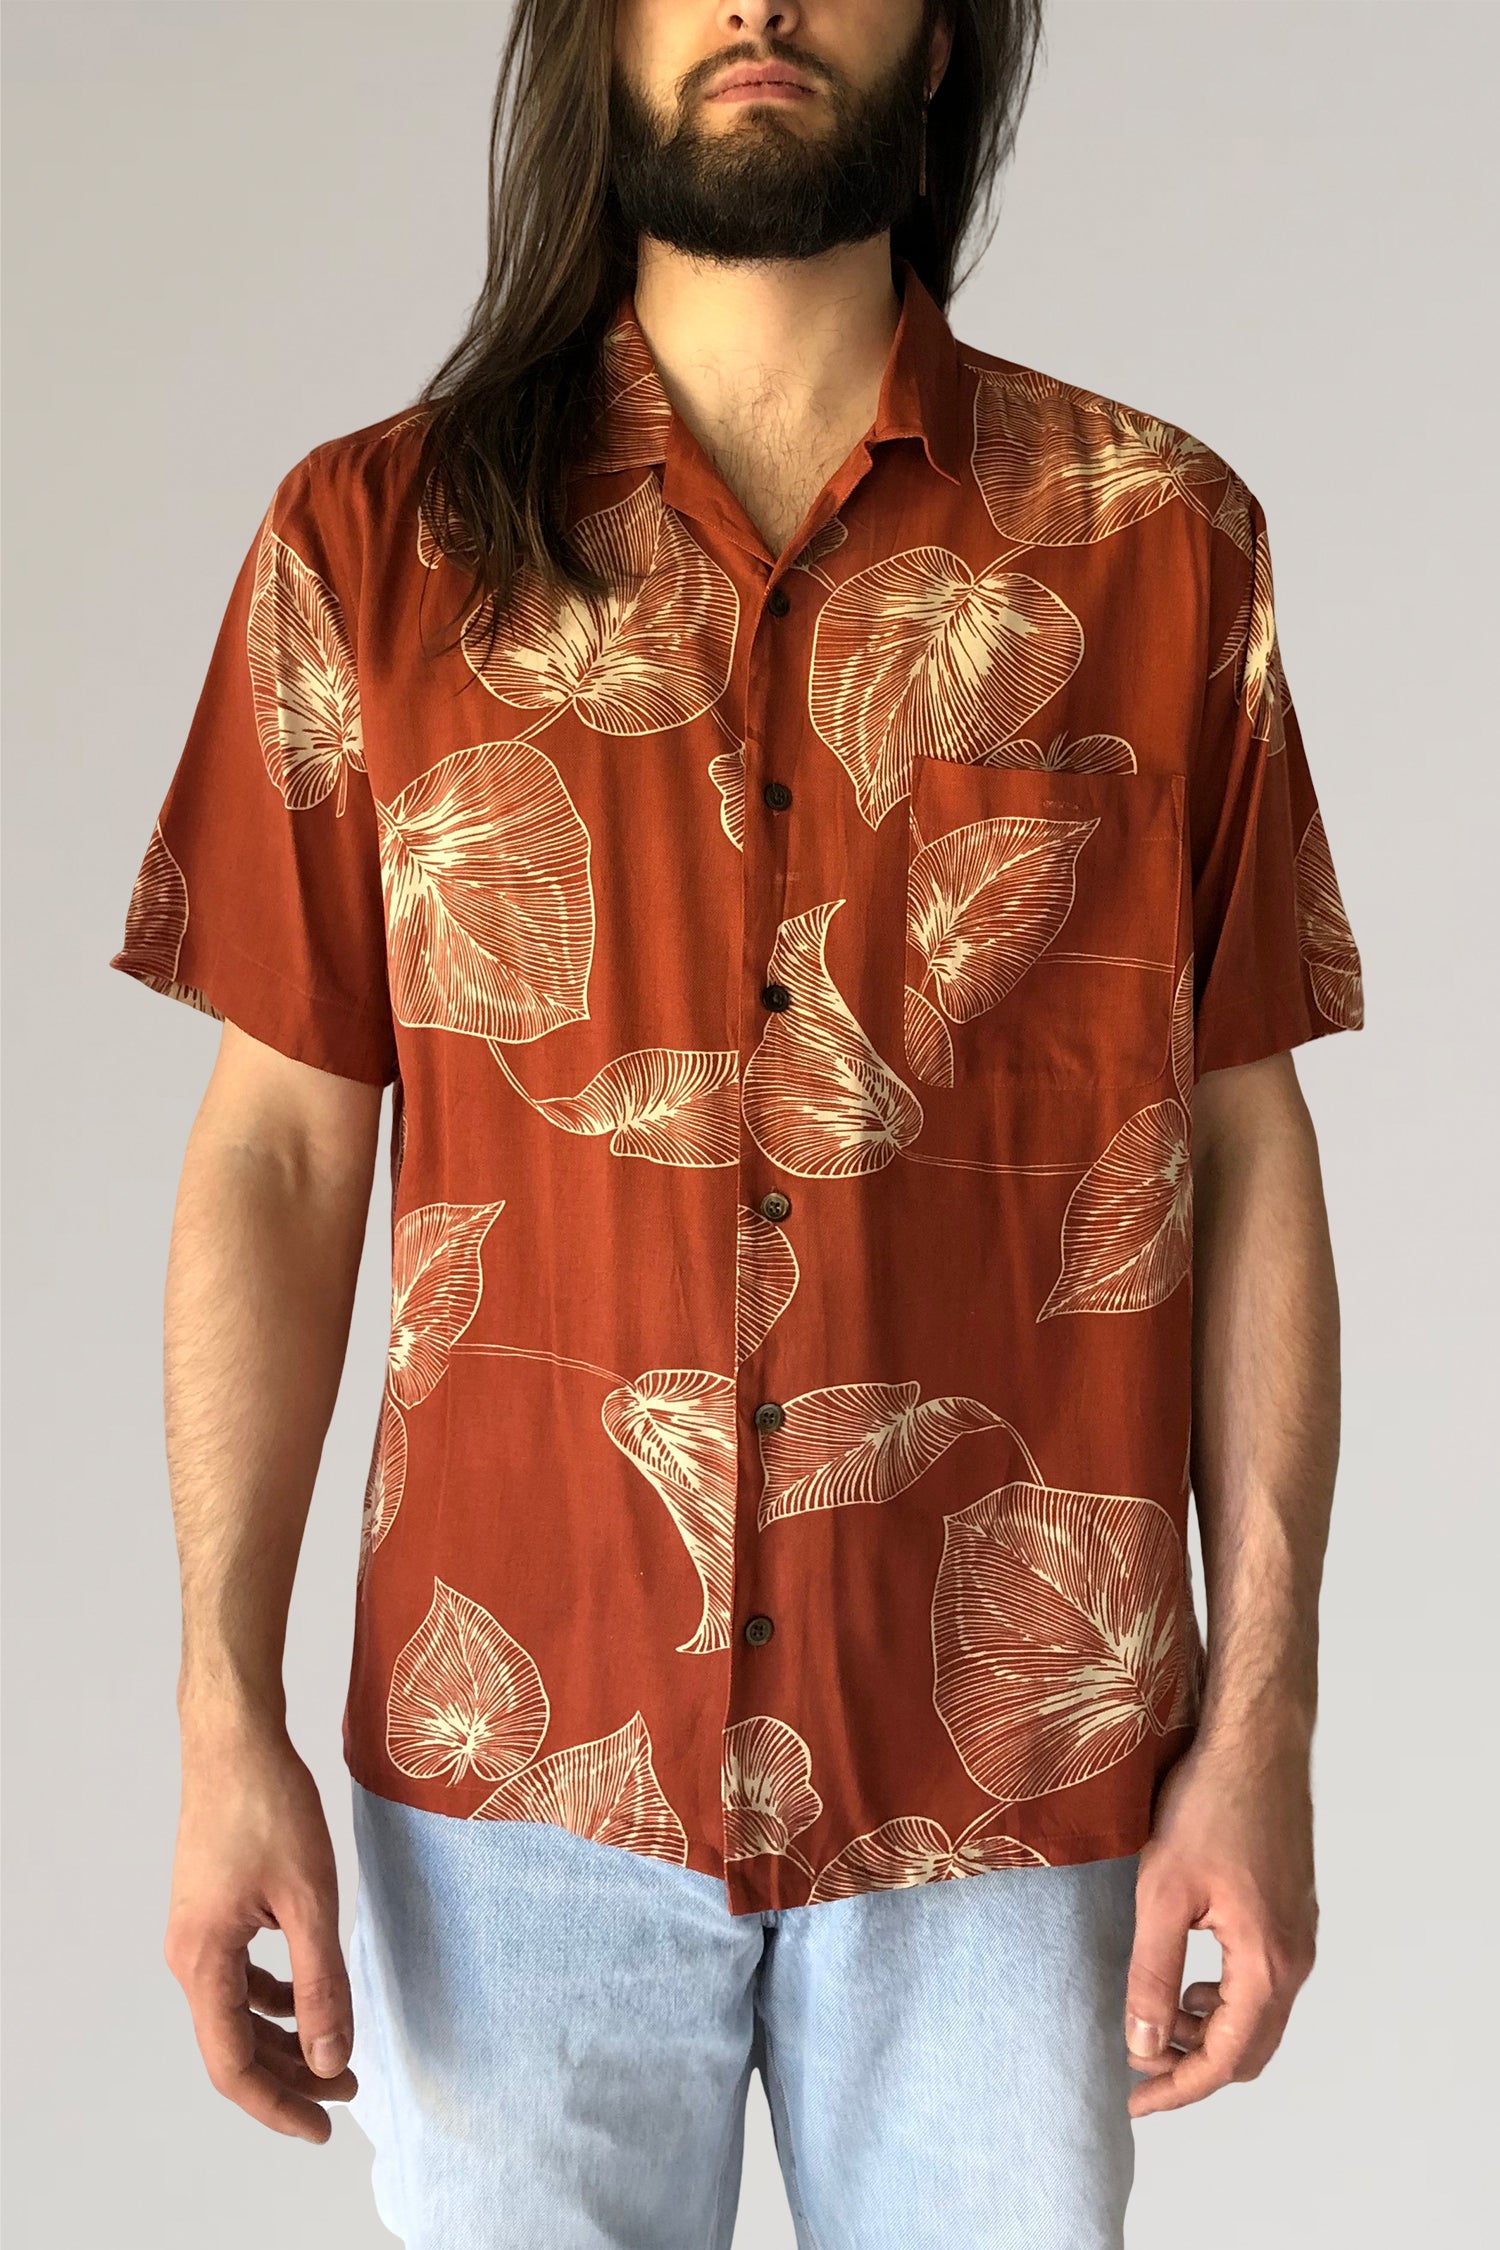 90s print shirt - PICKNWEIGHT - VINTAGE KILO STORE